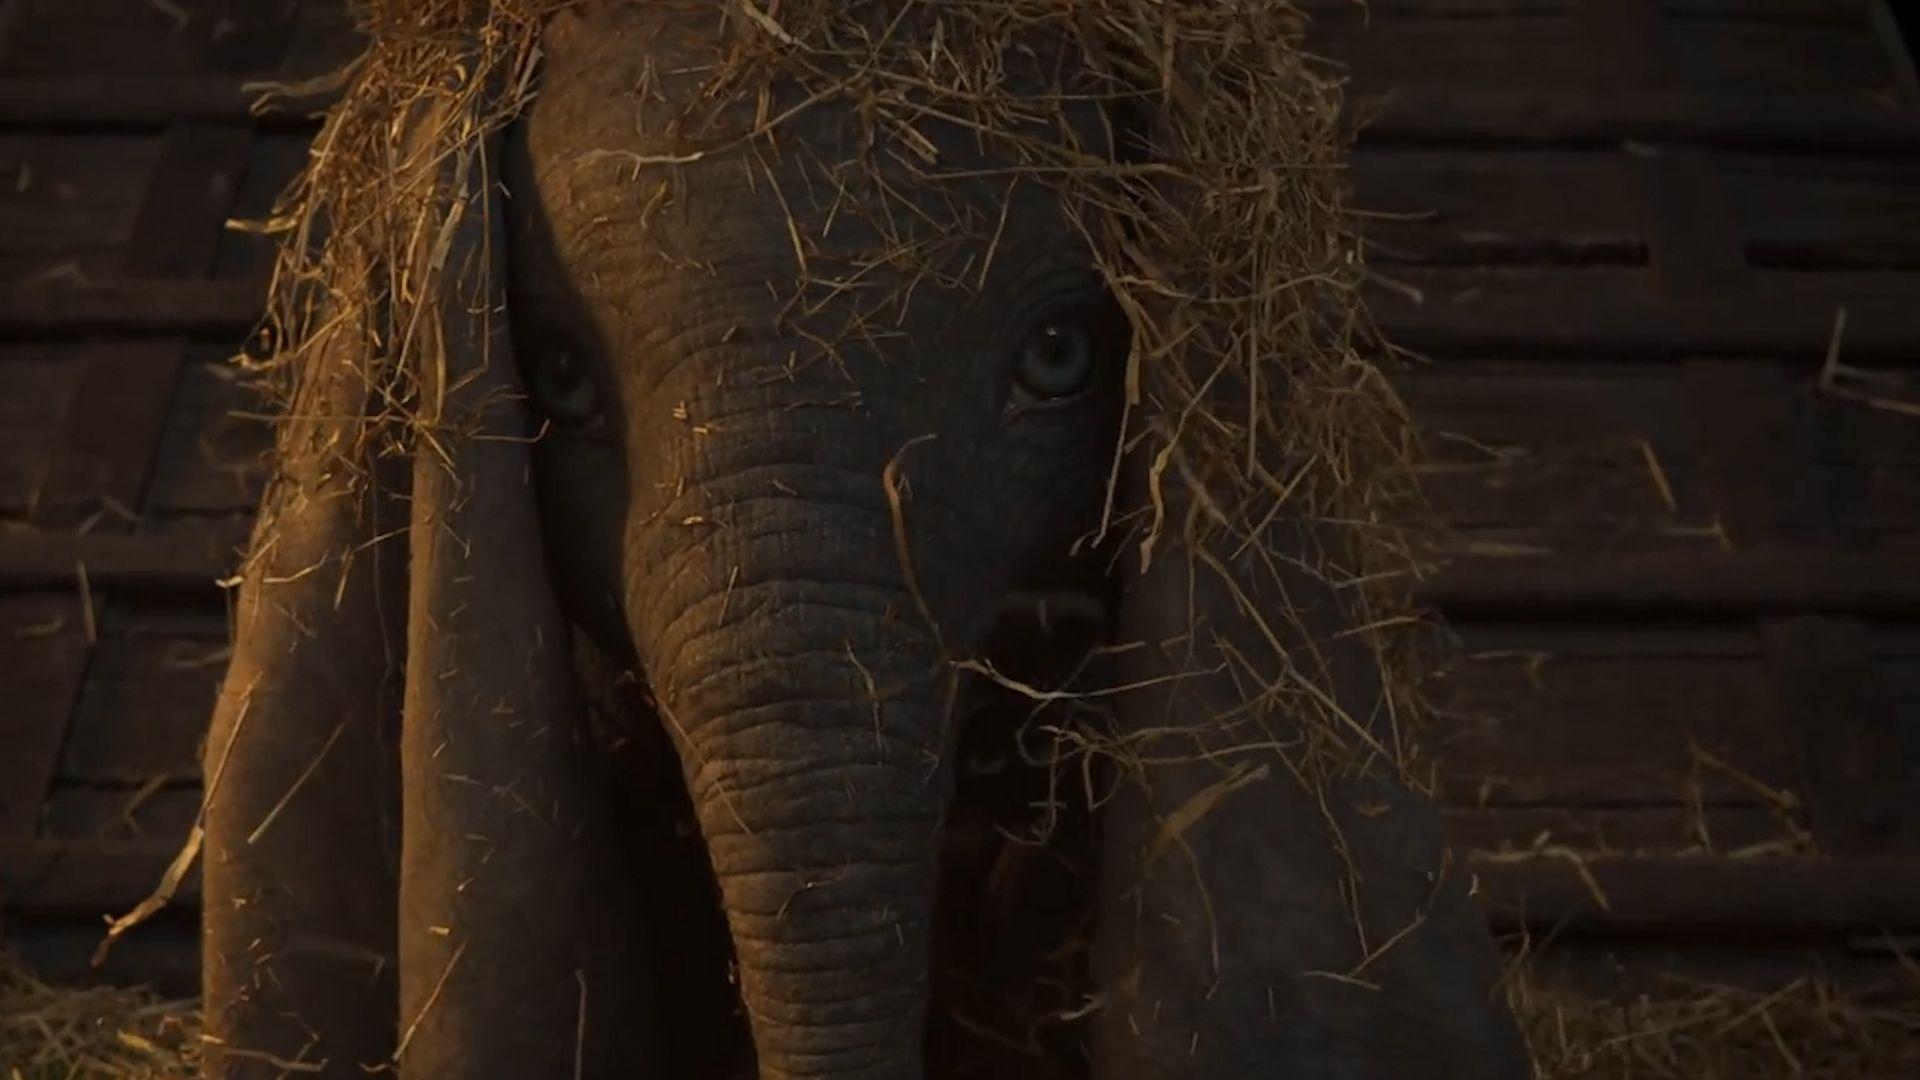 Dumbo' trailer. Watch News Videos Online